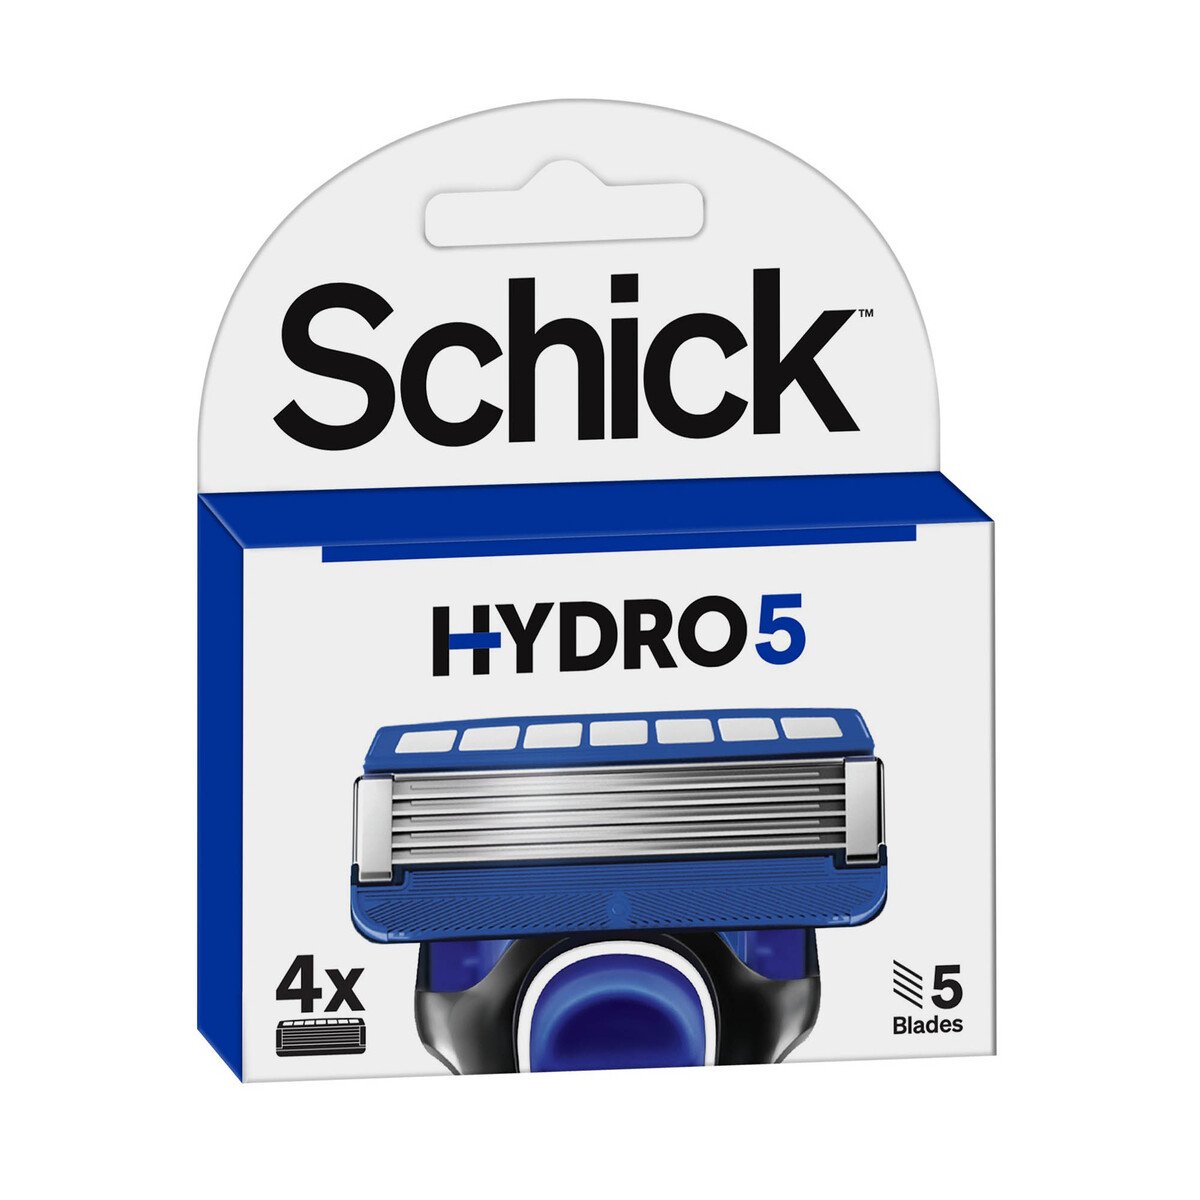 Schick Hydro 5 Blades 4 Cartridge